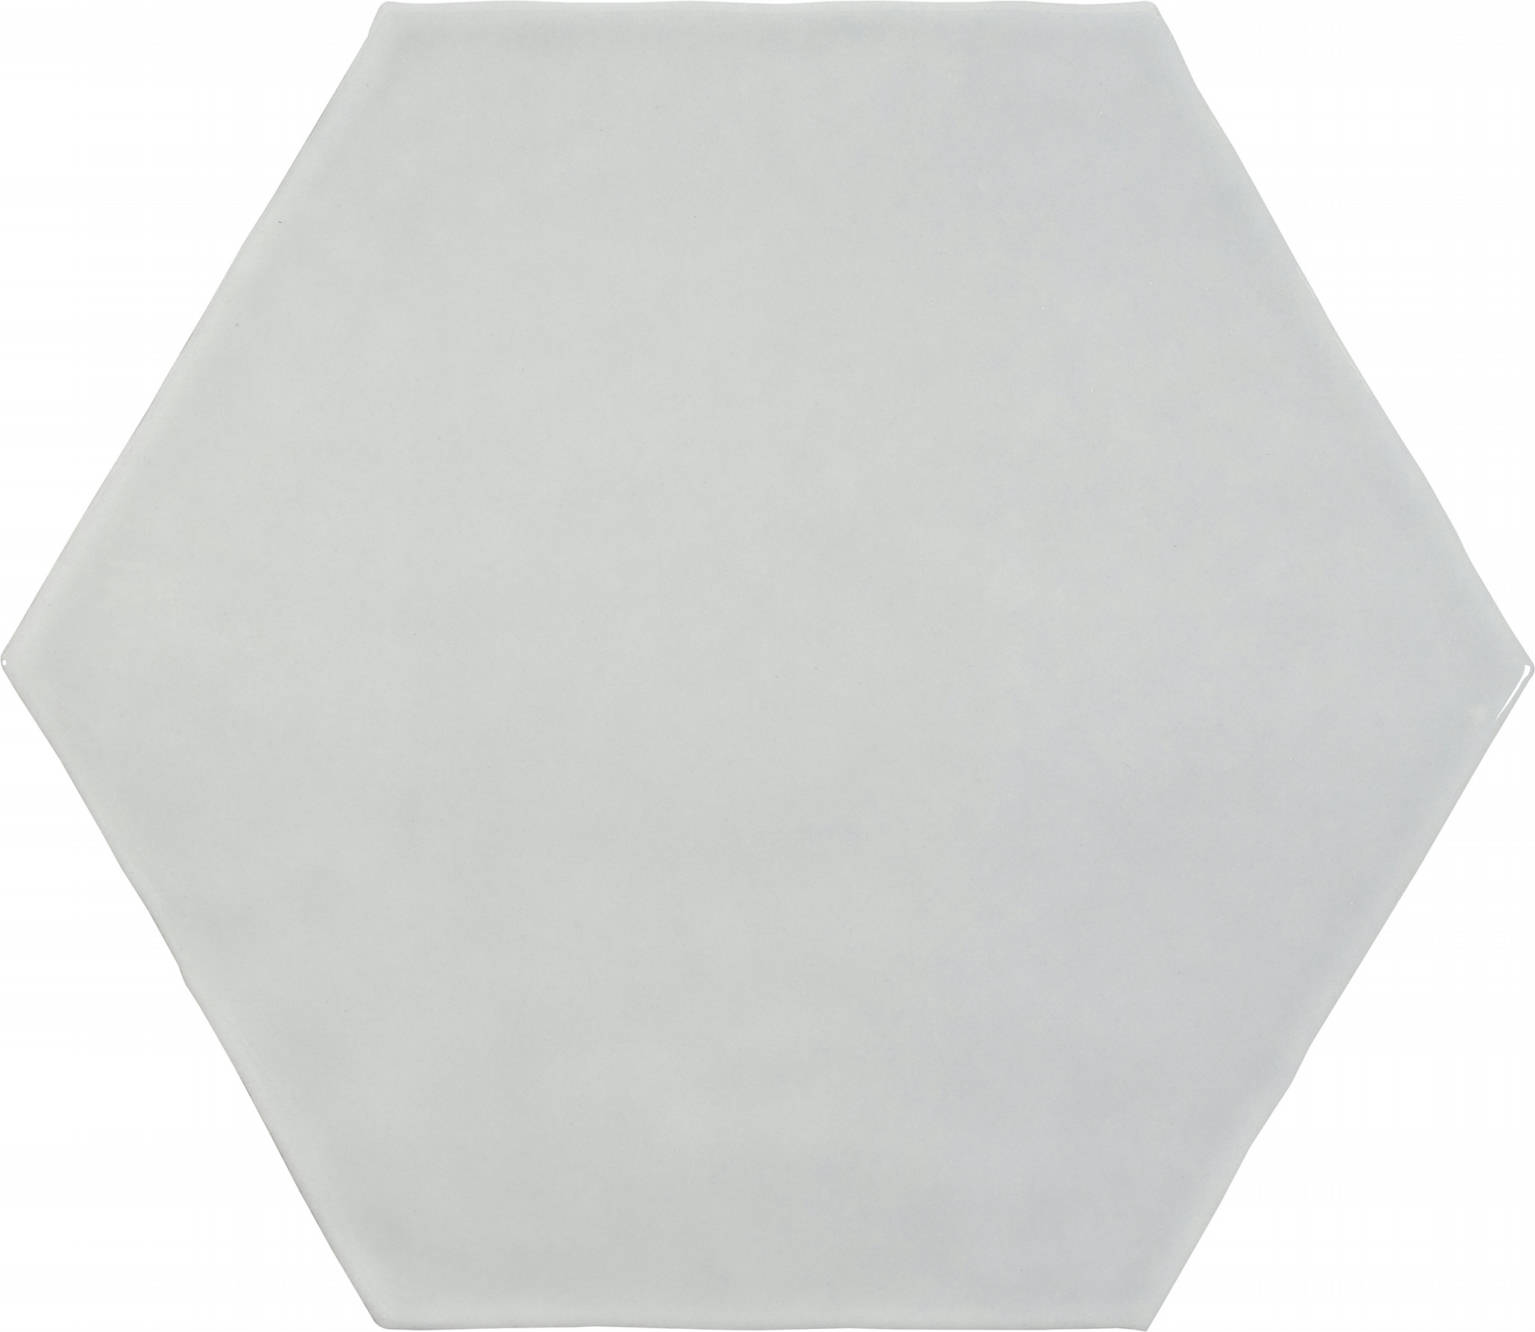 6" Bright Silver Glossy Hexagon | Arley Wholesale